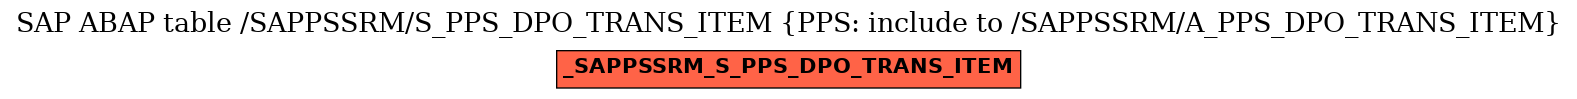 E-R Diagram for table /SAPPSSRM/S_PPS_DPO_TRANS_ITEM (PPS: include to /SAPPSSRM/A_PPS_DPO_TRANS_ITEM)